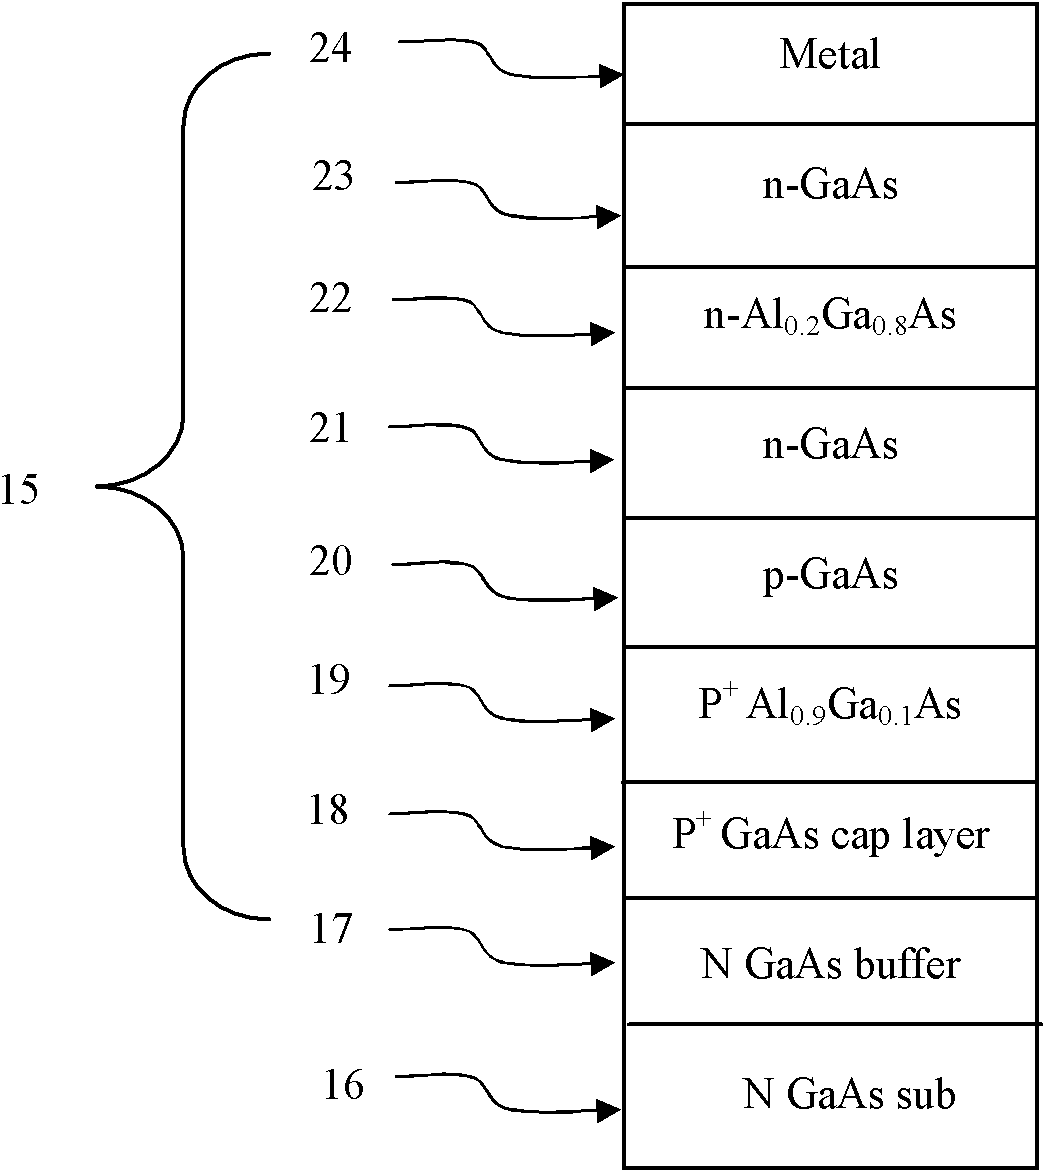 Method for performing low-temperature metal bonding on GaAs and Si